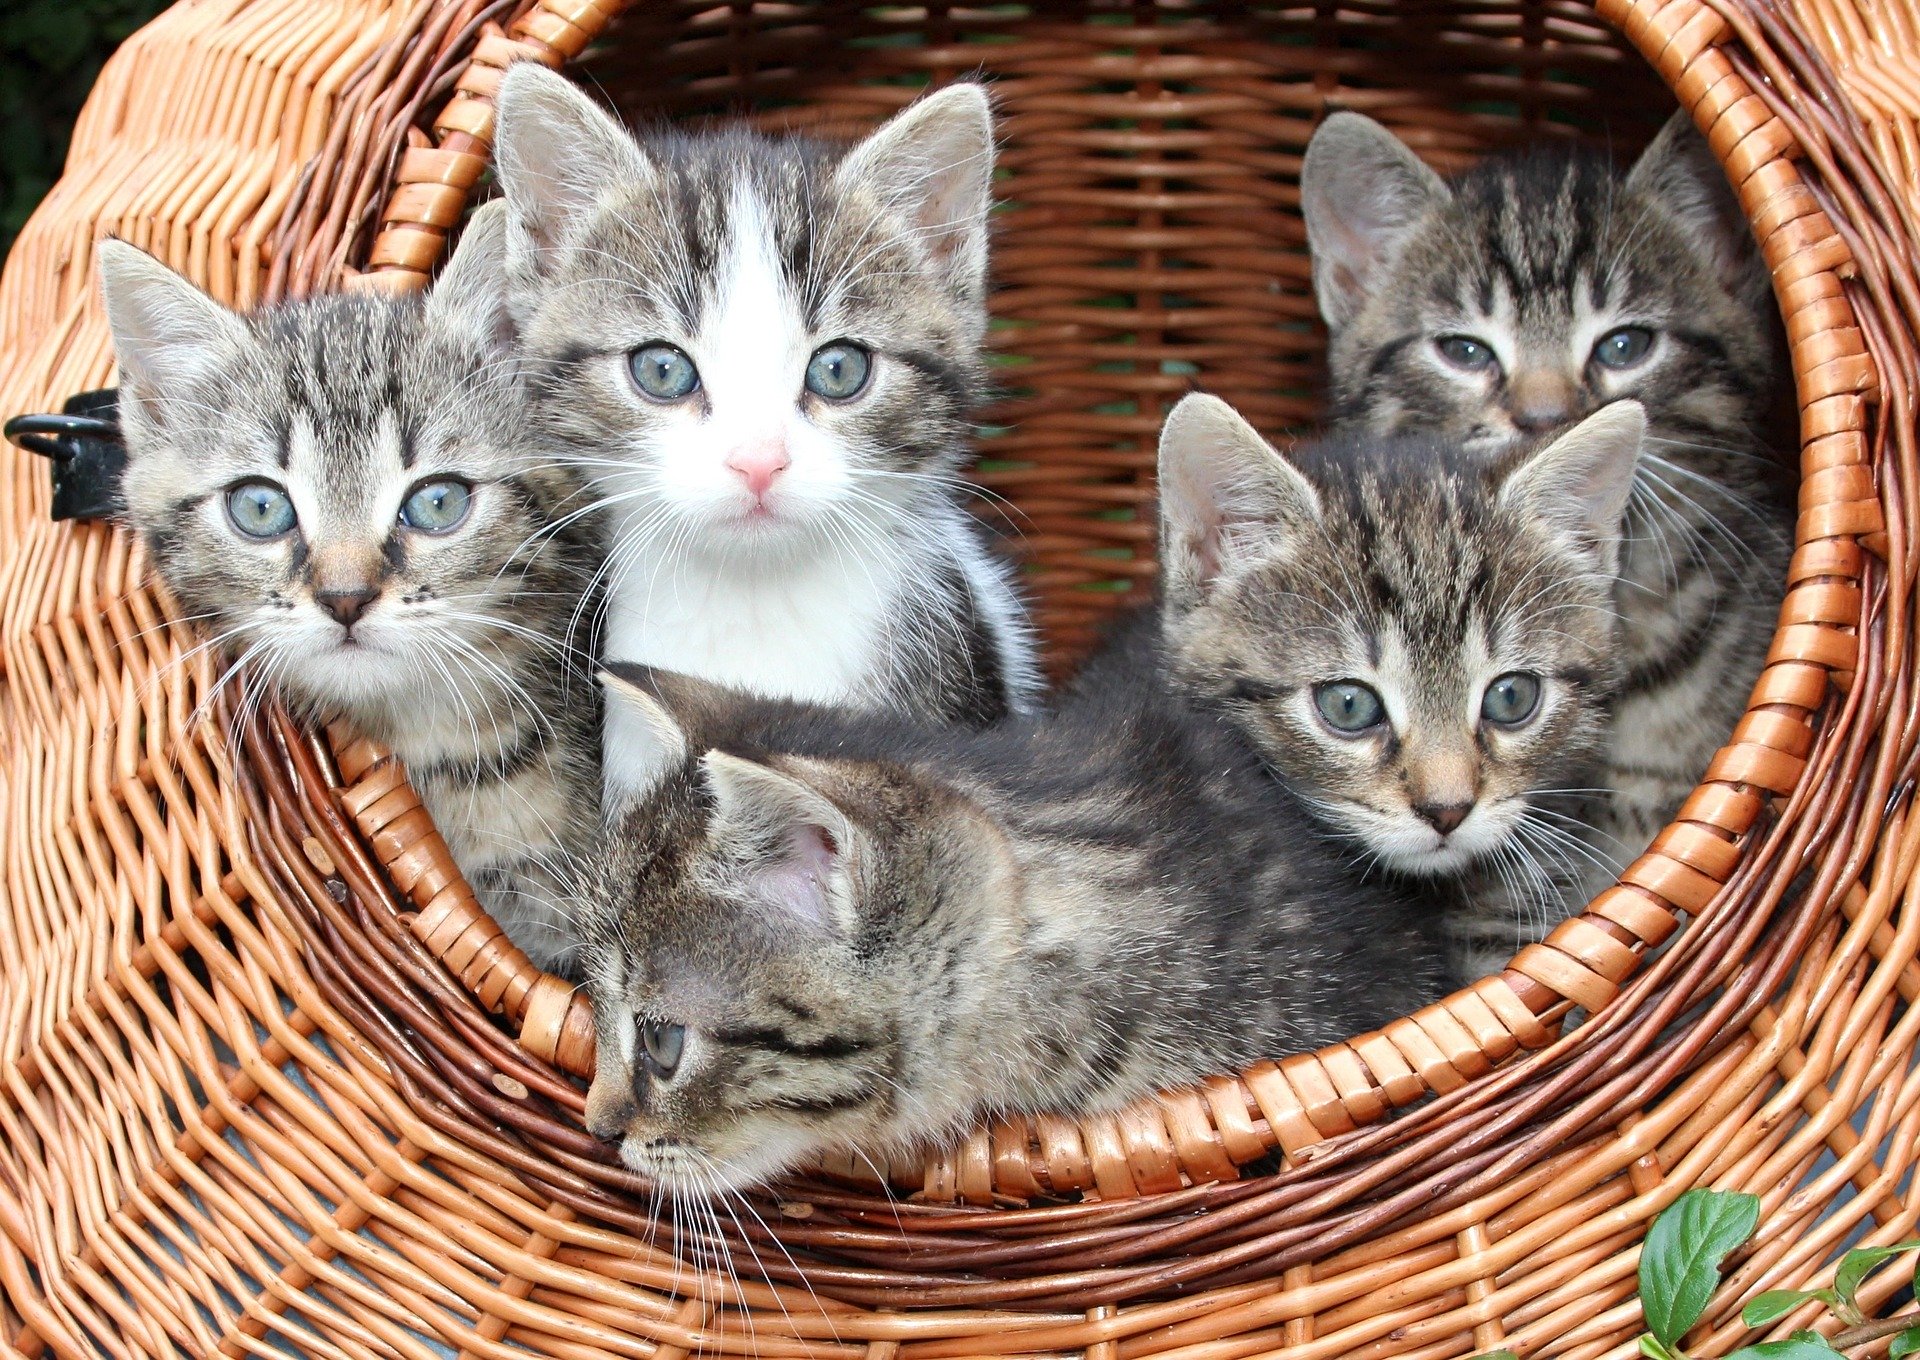 A basket full of kitties